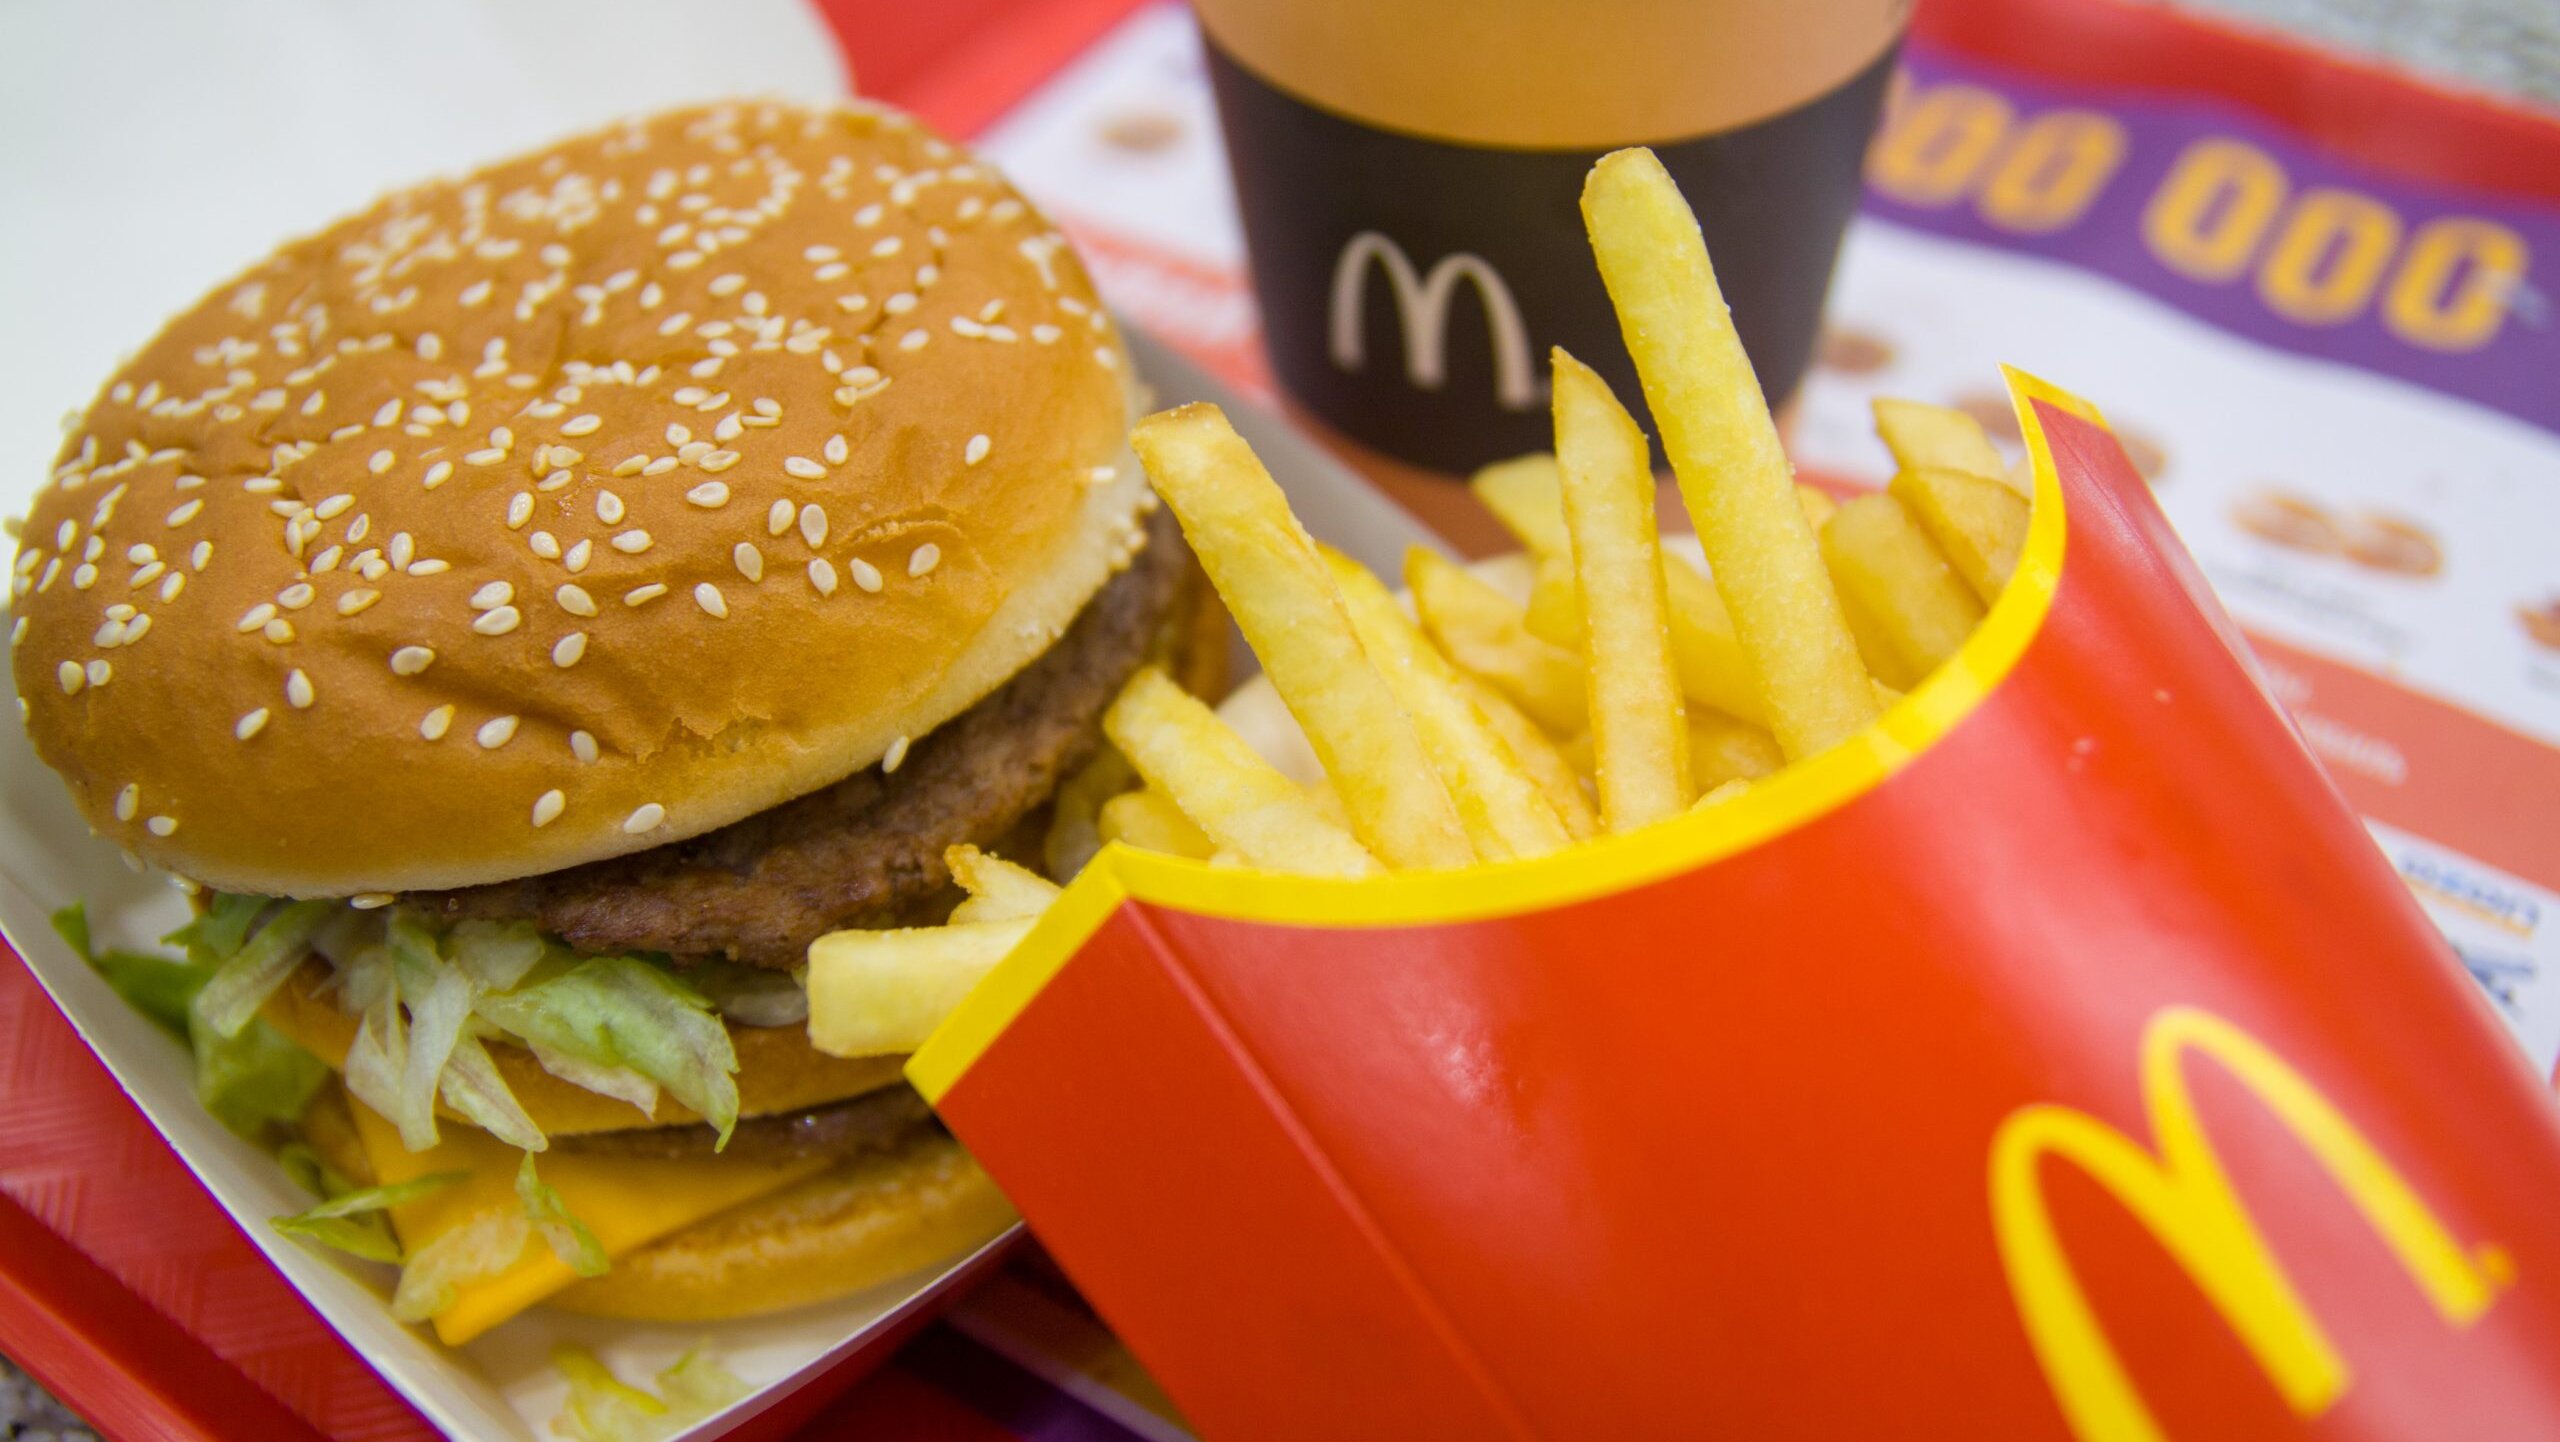 McDonald's burger, fries and drink